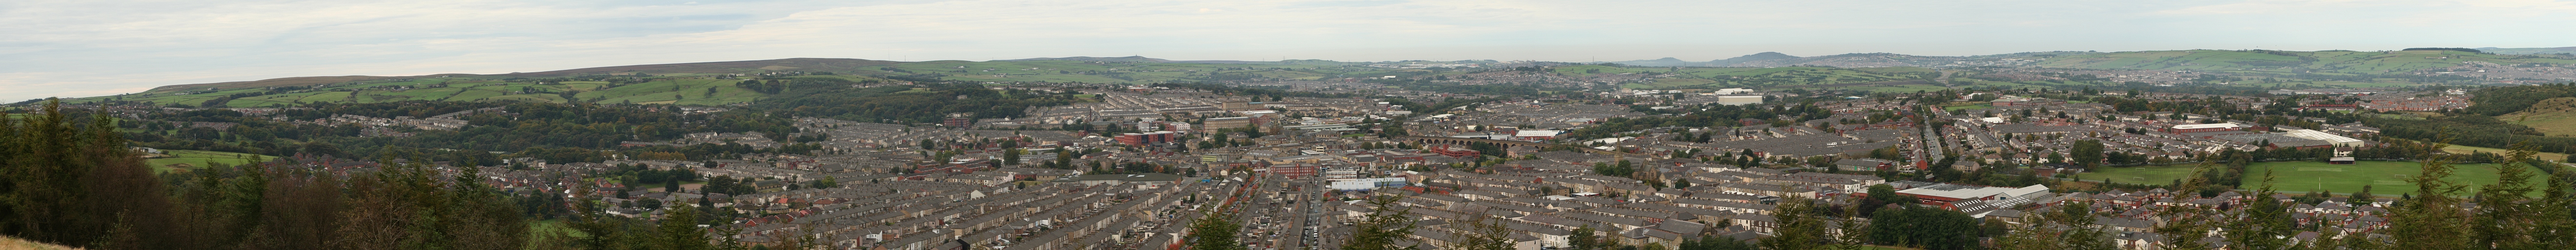 Panorama miasta Accrington, Lancashire ze wzgrza Hillock Vale